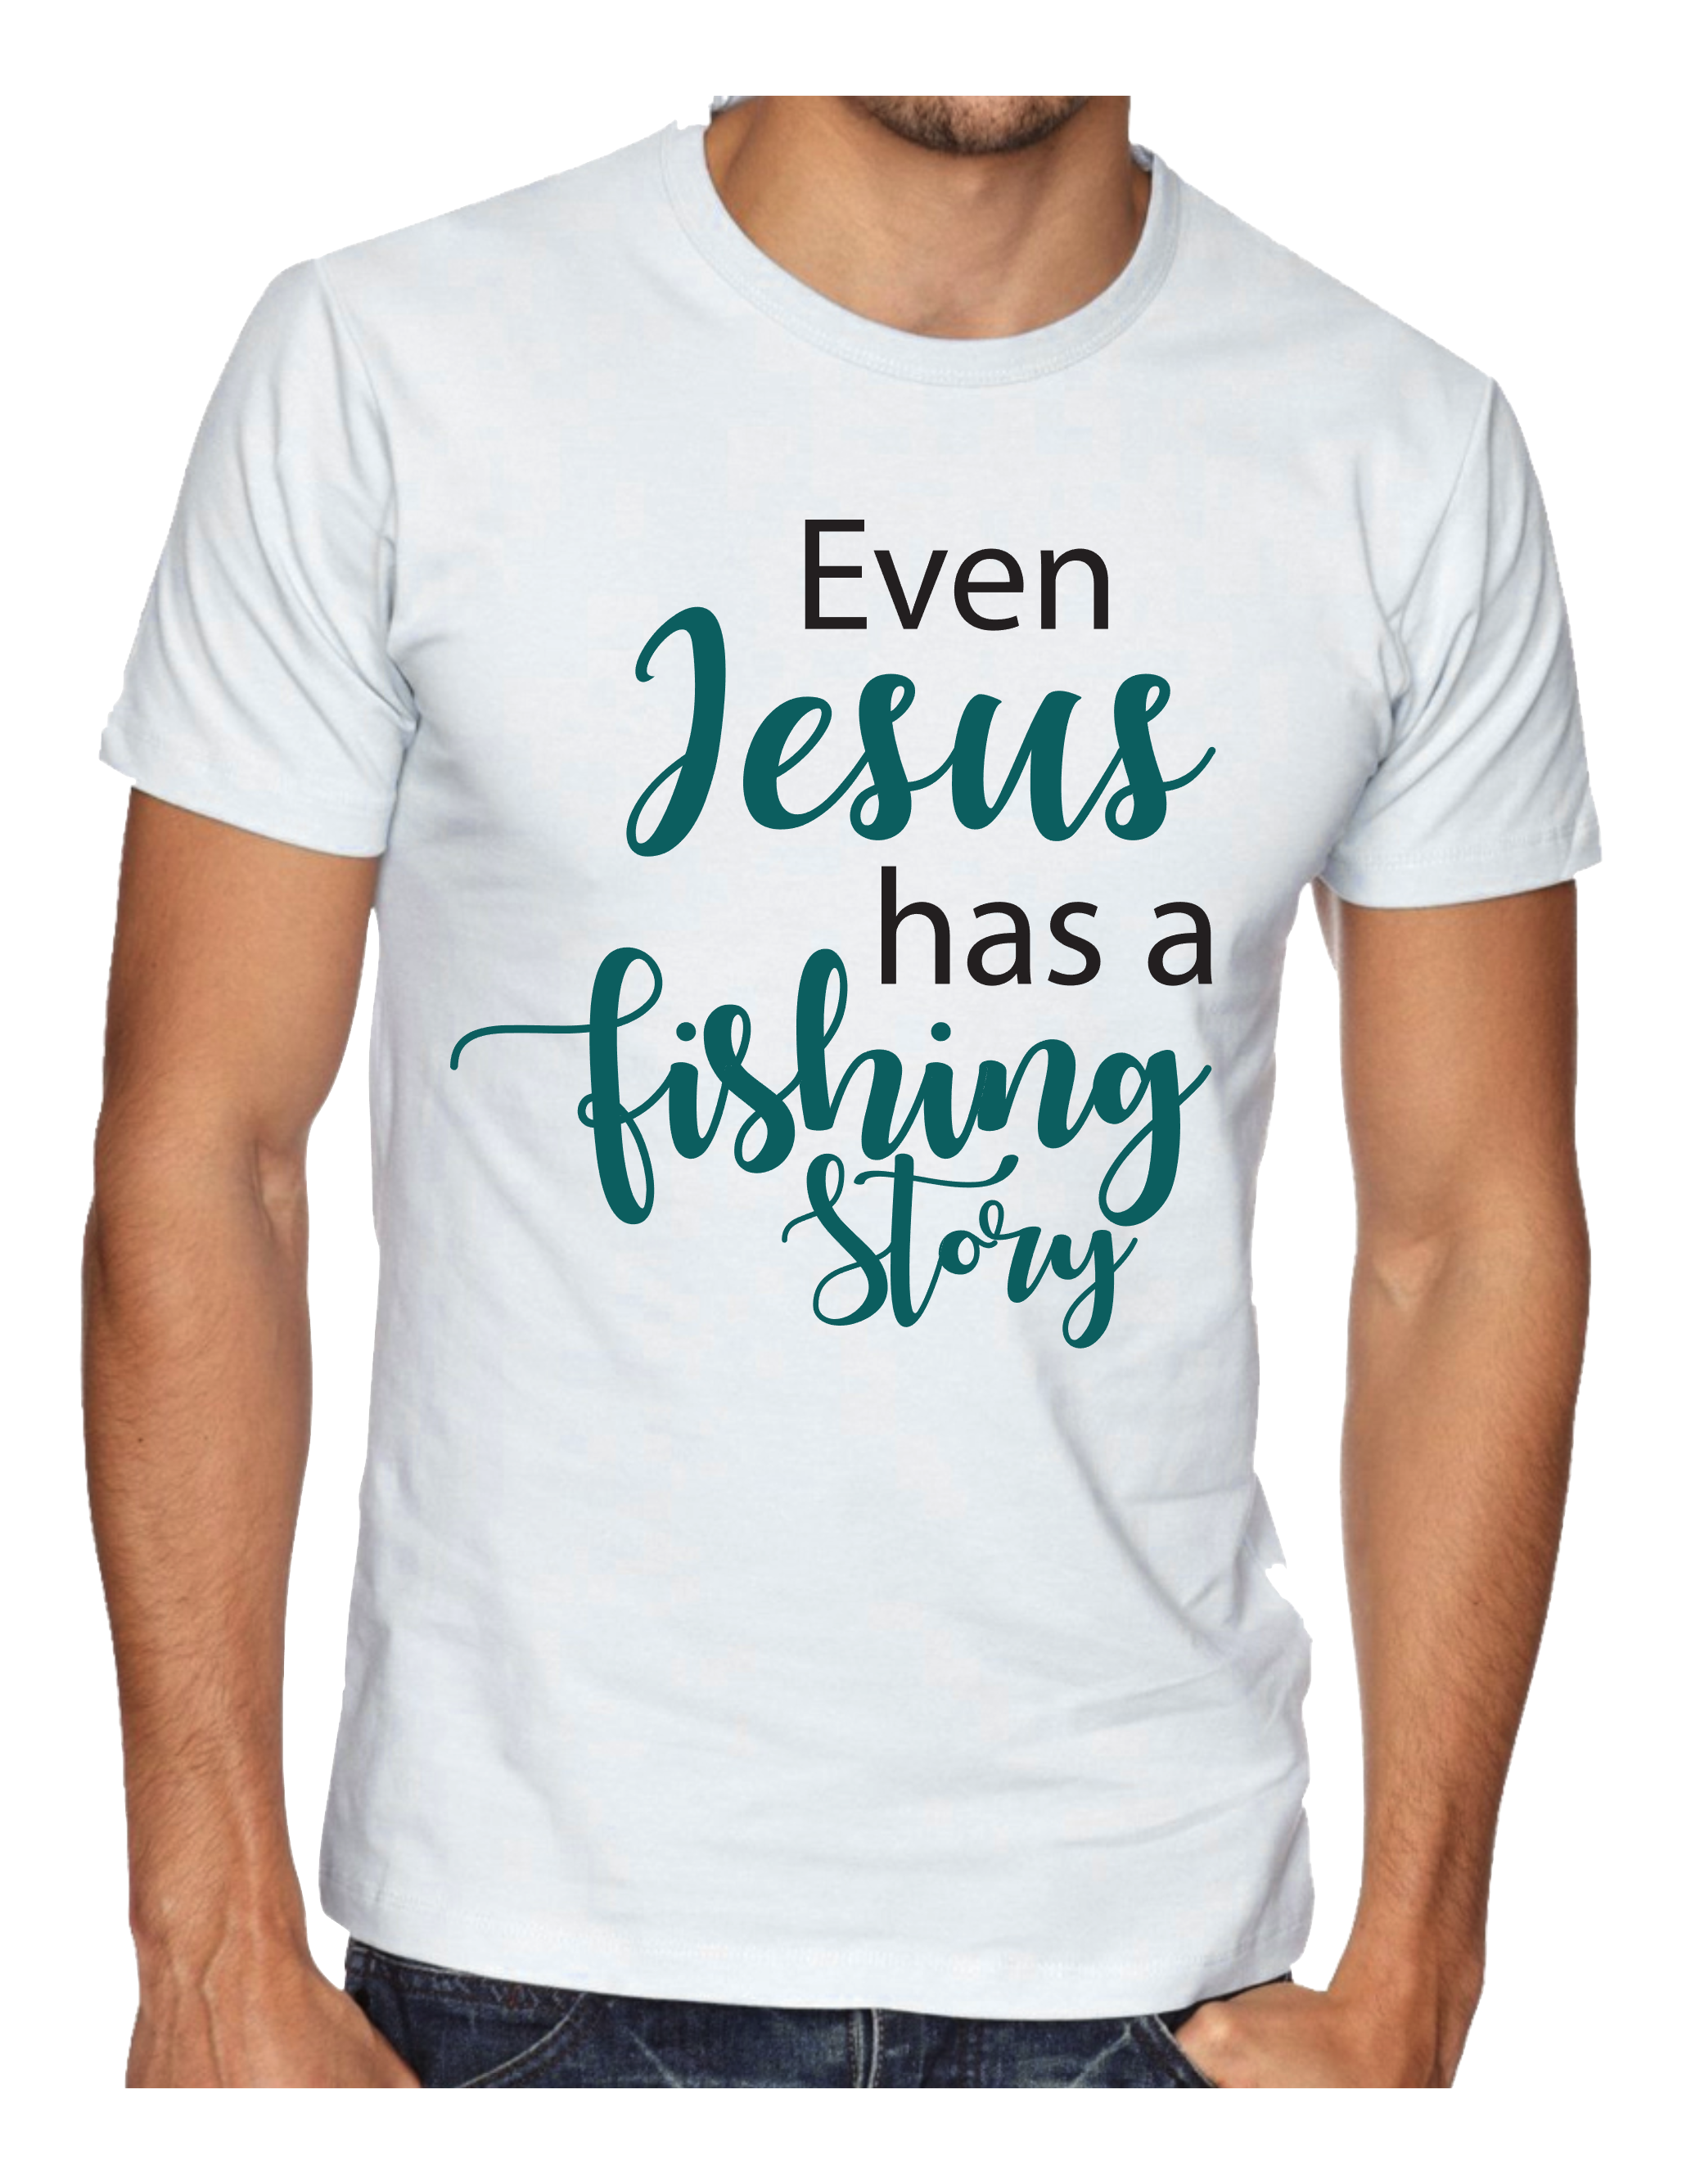 Even Jesus had a Fishing Story Tee Shirt